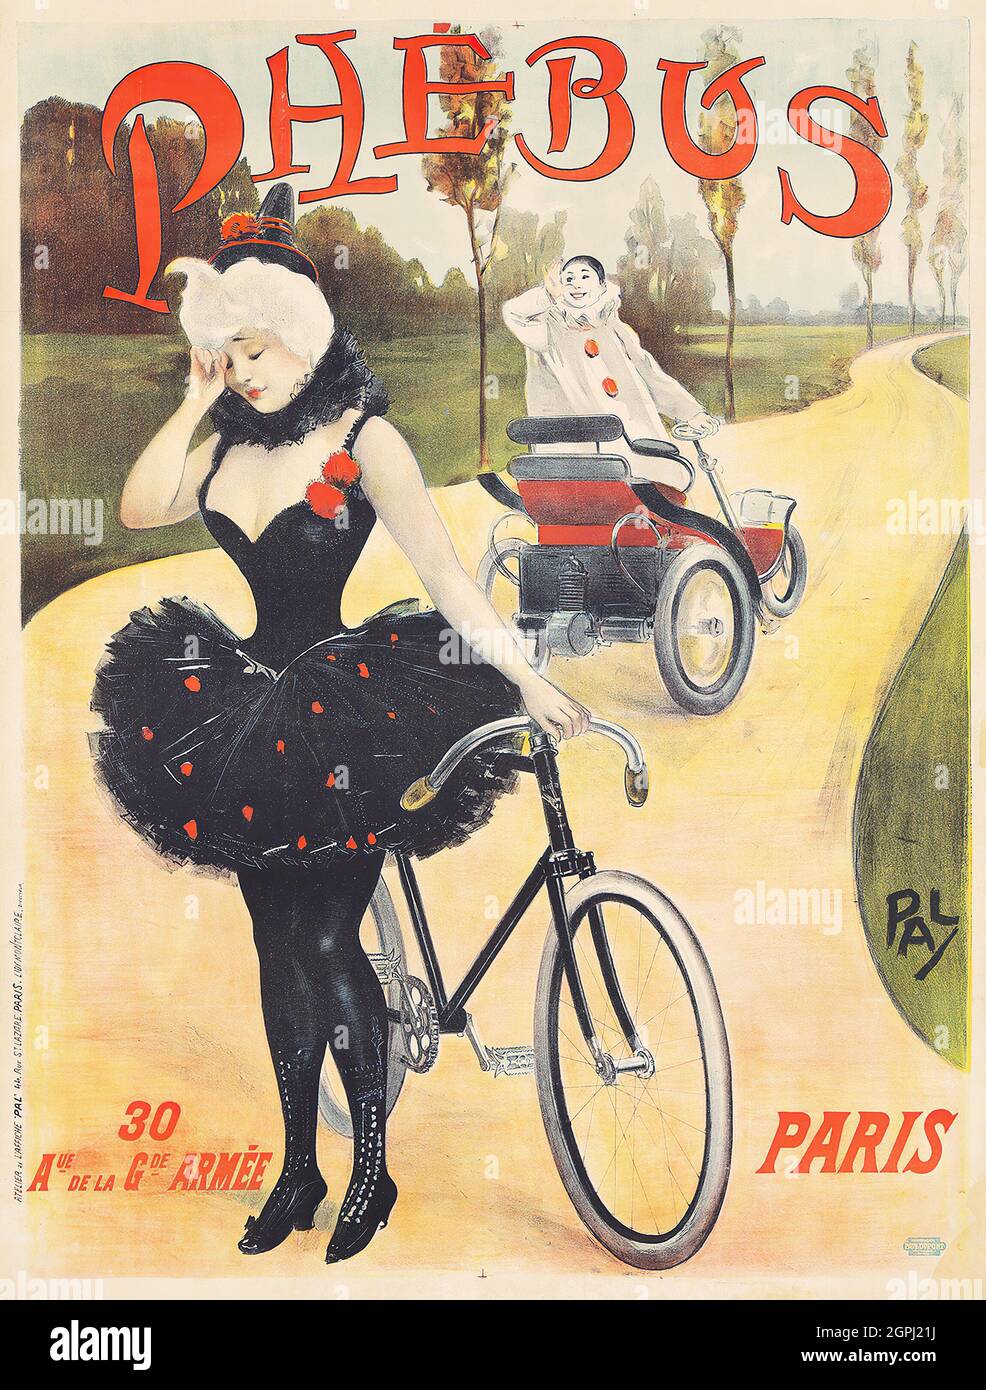 Poster art by Jean de Paleologu (or Paleologue) (1855 – 24 November 1942) Nickname 'PAL'. Phebus (ca. 1899). Bicycle advertisement. Stock Photo